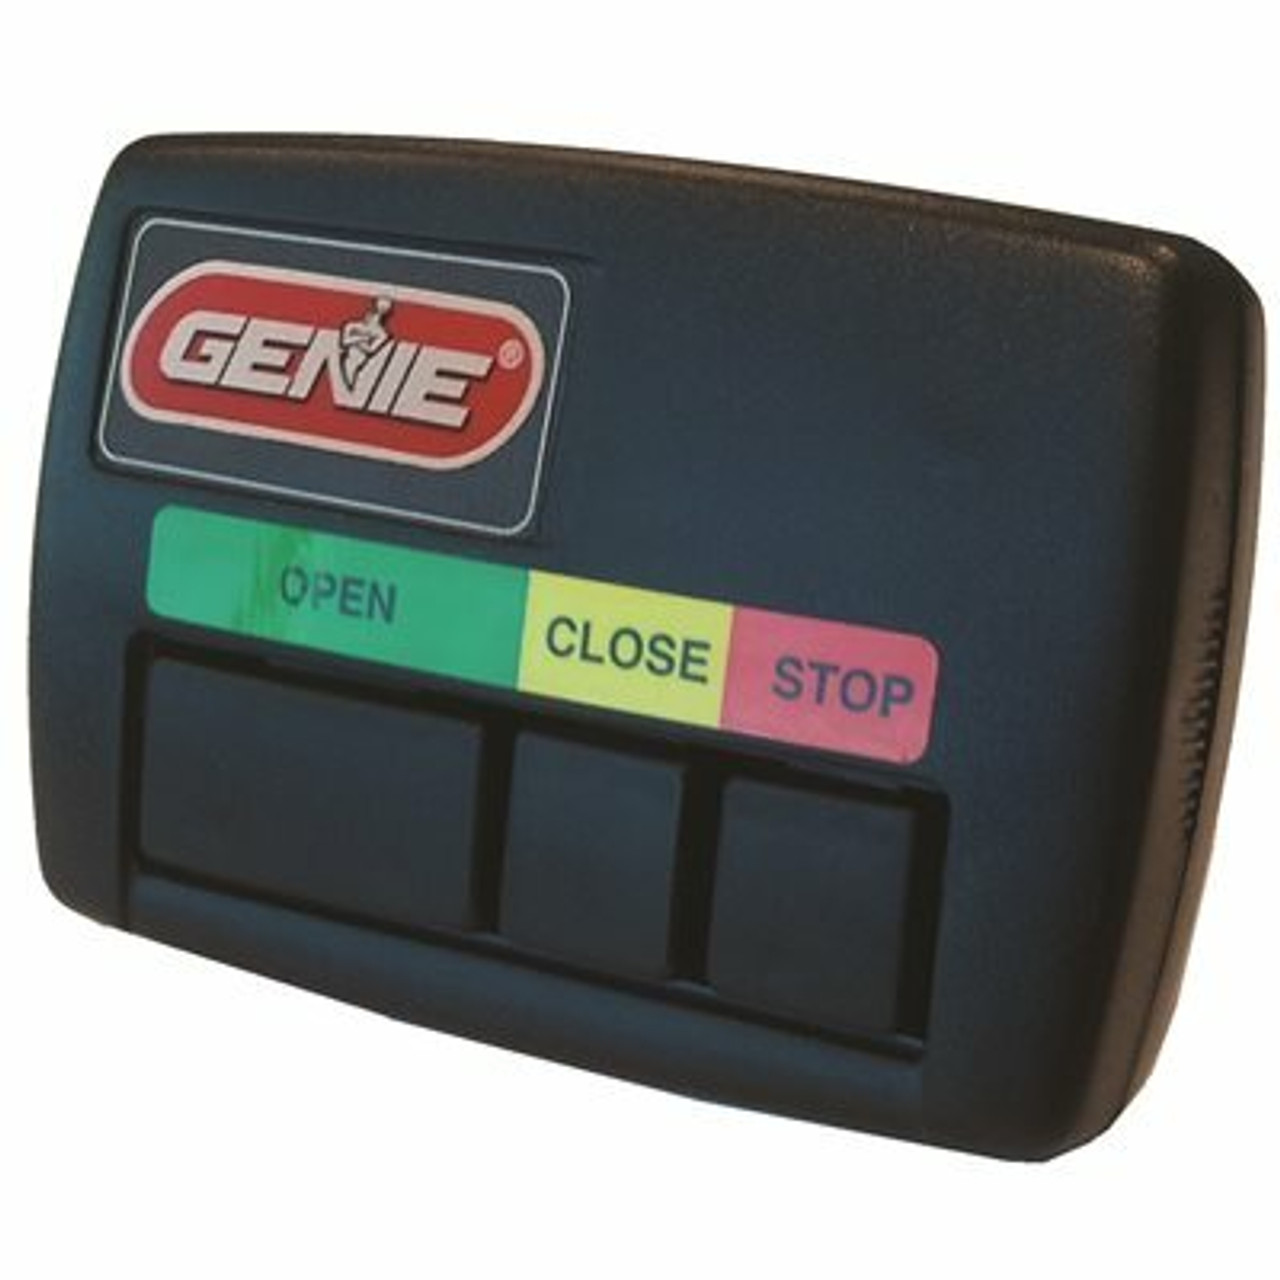 Genie Gidfx5.S Remote